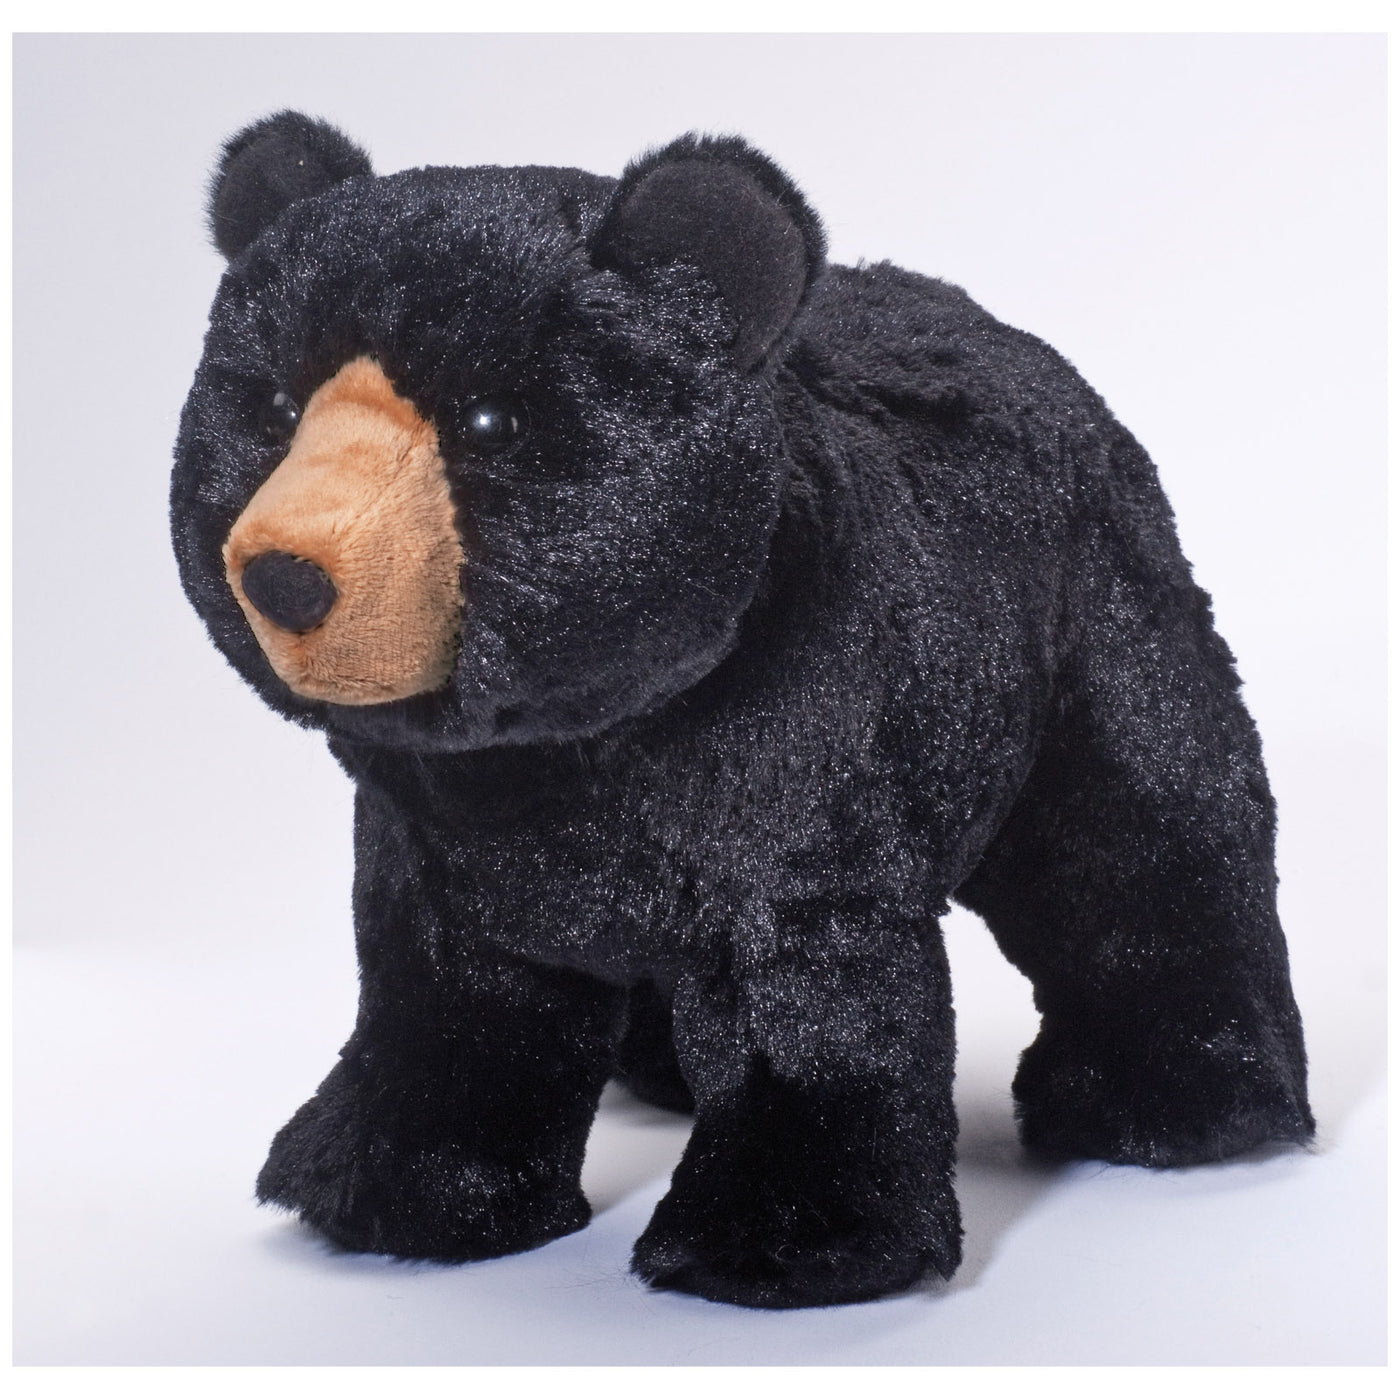 Orso Black Bear